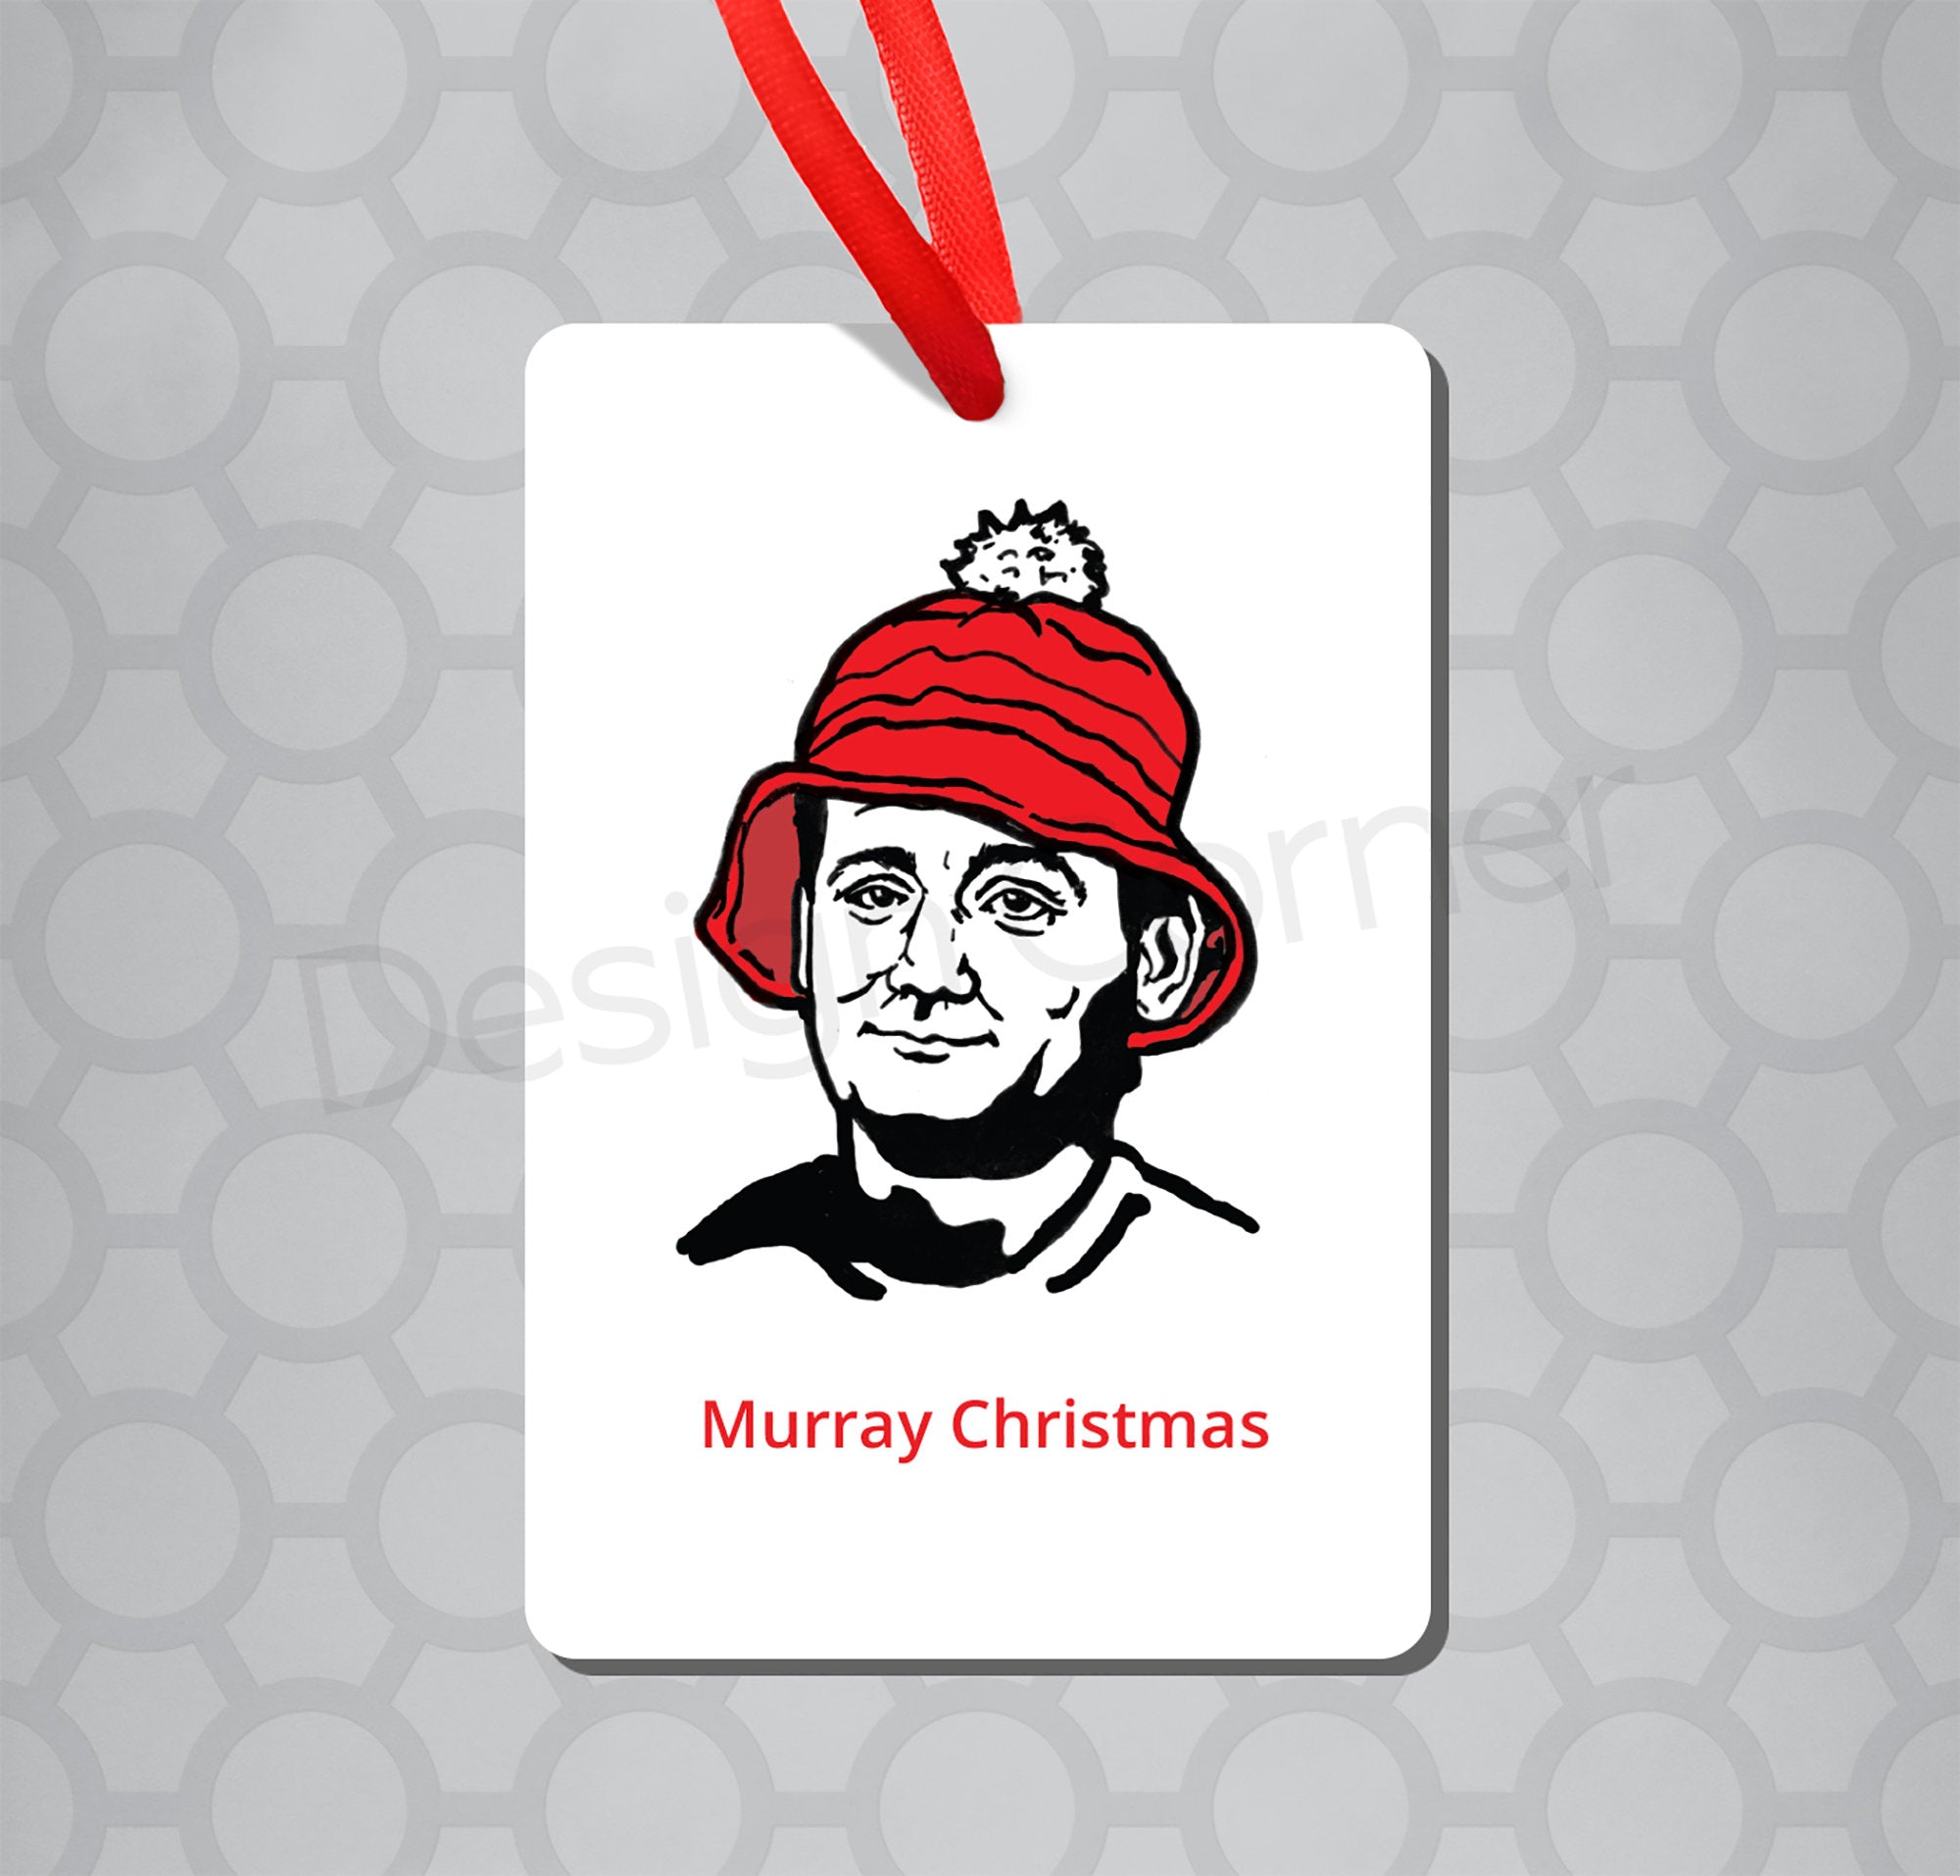 Murray Christmas Pun Magnet and Ornament